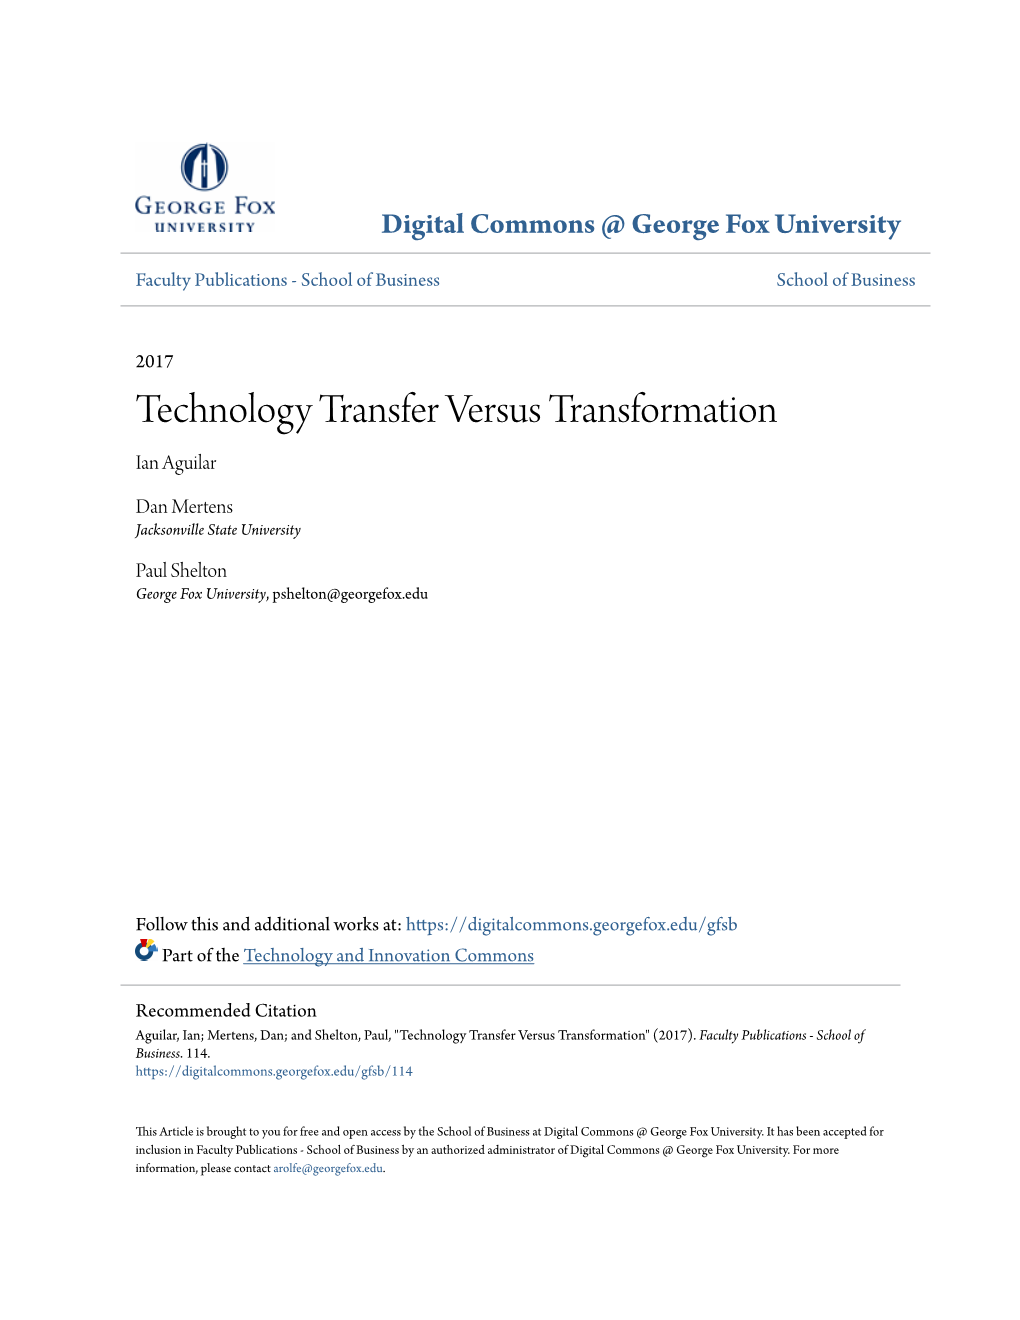 Technology Transfer Versus Transformation Ian Aguilar